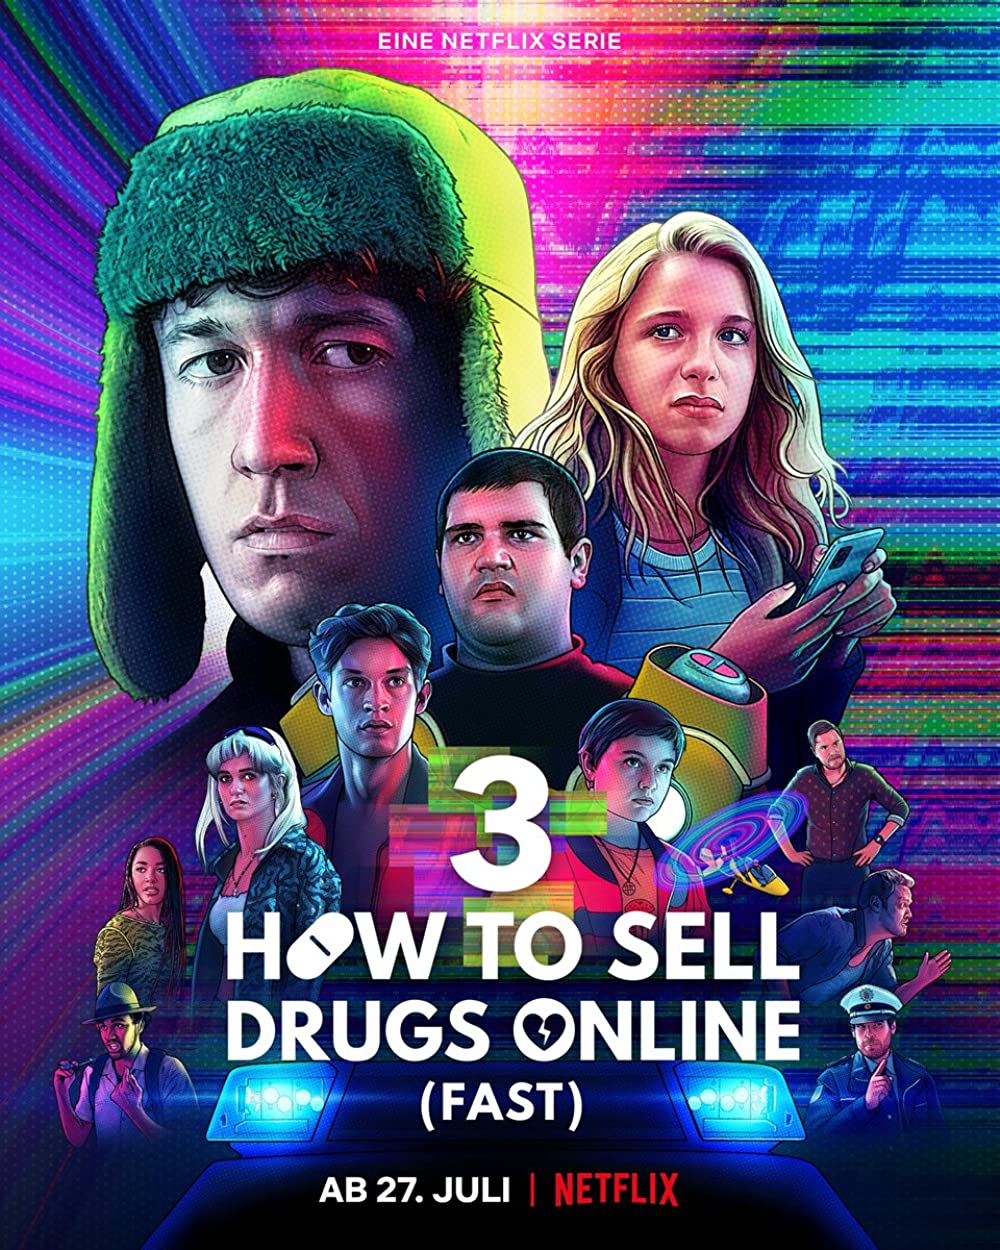 Filmbeschreibung zu How to sell drugs online (fast) - Staffel 2